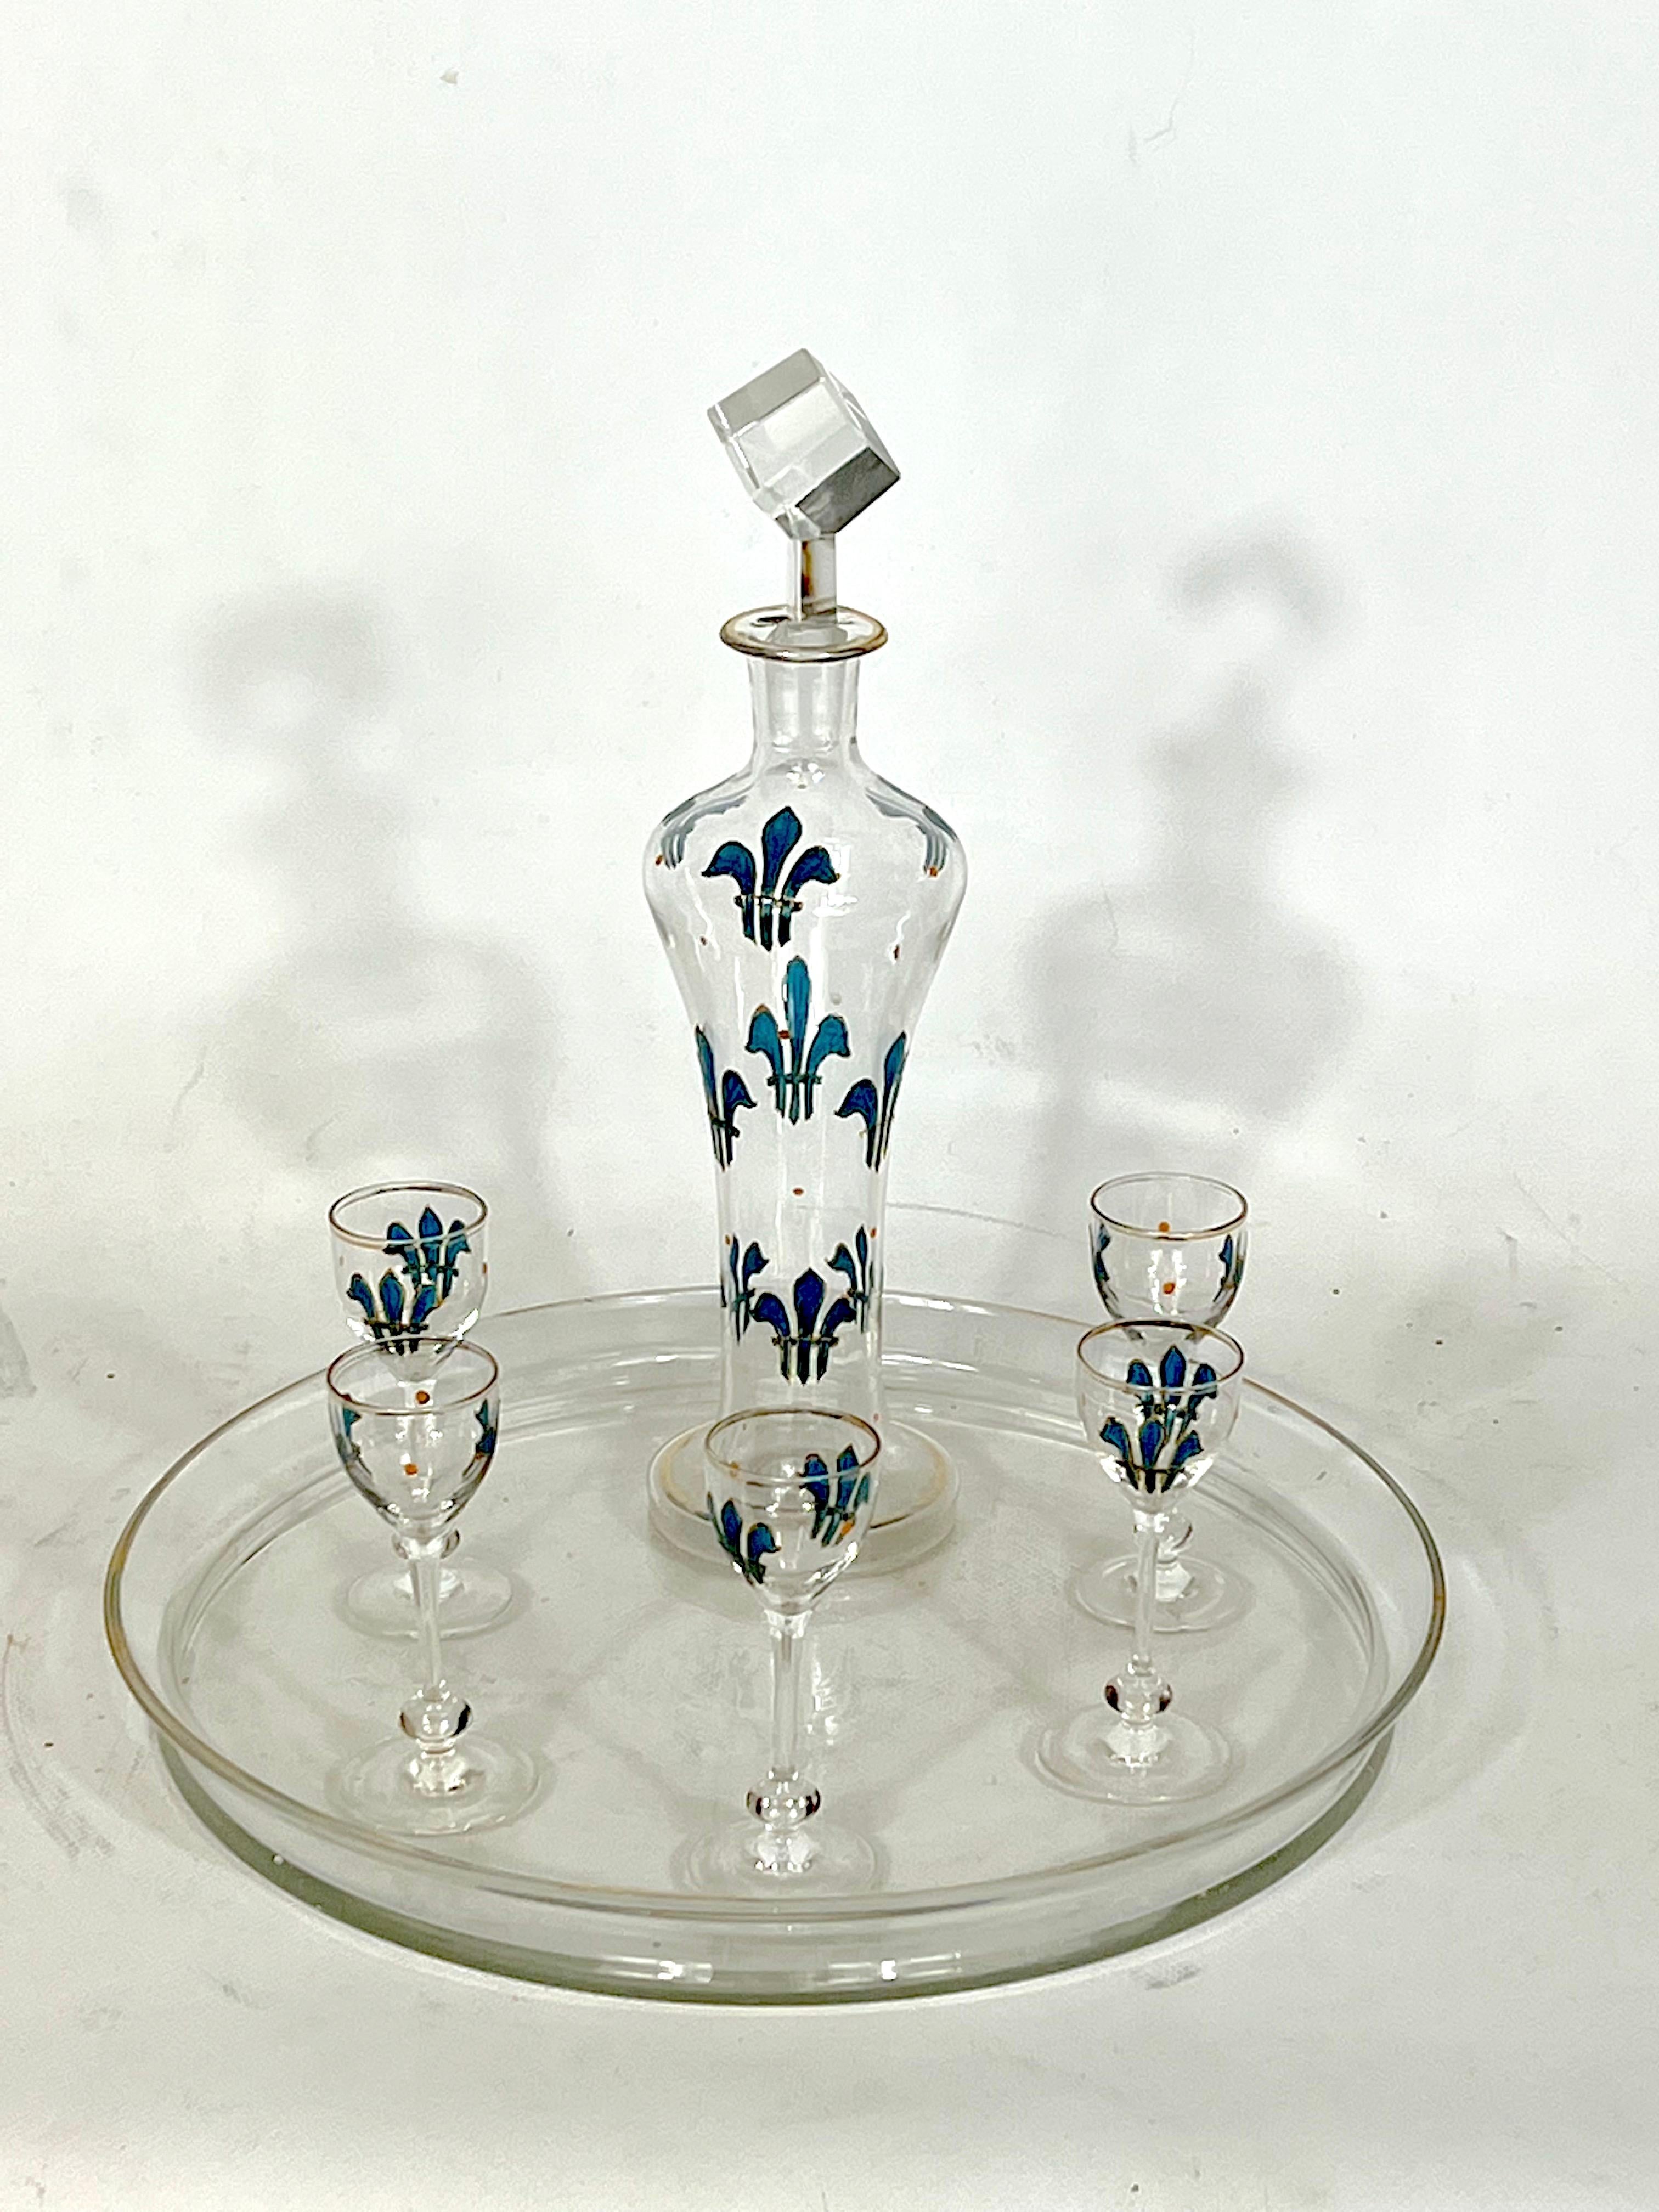 20th Century Italian Art Nouveau Glass Liquor Set from 1920s For Sale